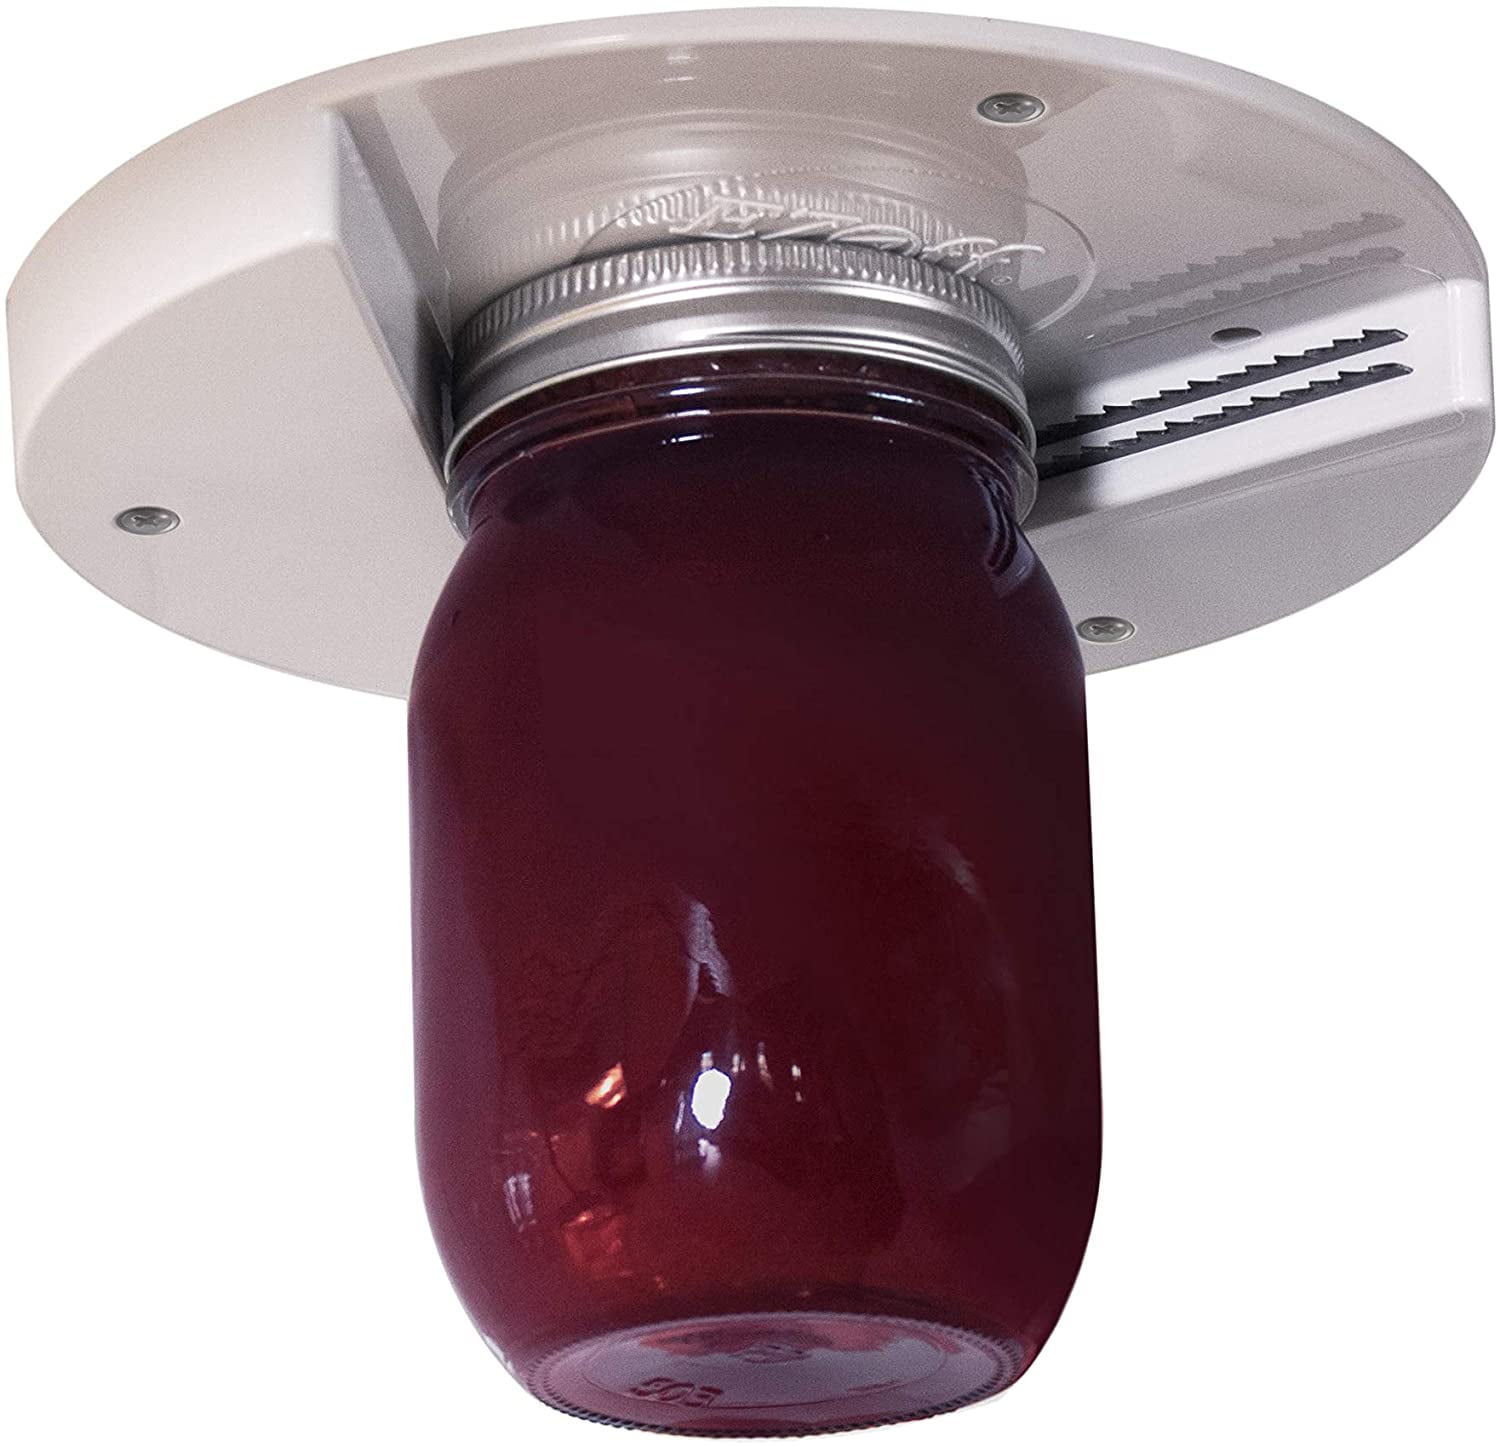 Jar Opener For Weak Hands - Under Cabinet, Easy Grip, One Handed Jar &  Bottle Opener - Removes Tight Jar Lid For Seniors With Arthritis -  Essential Ki